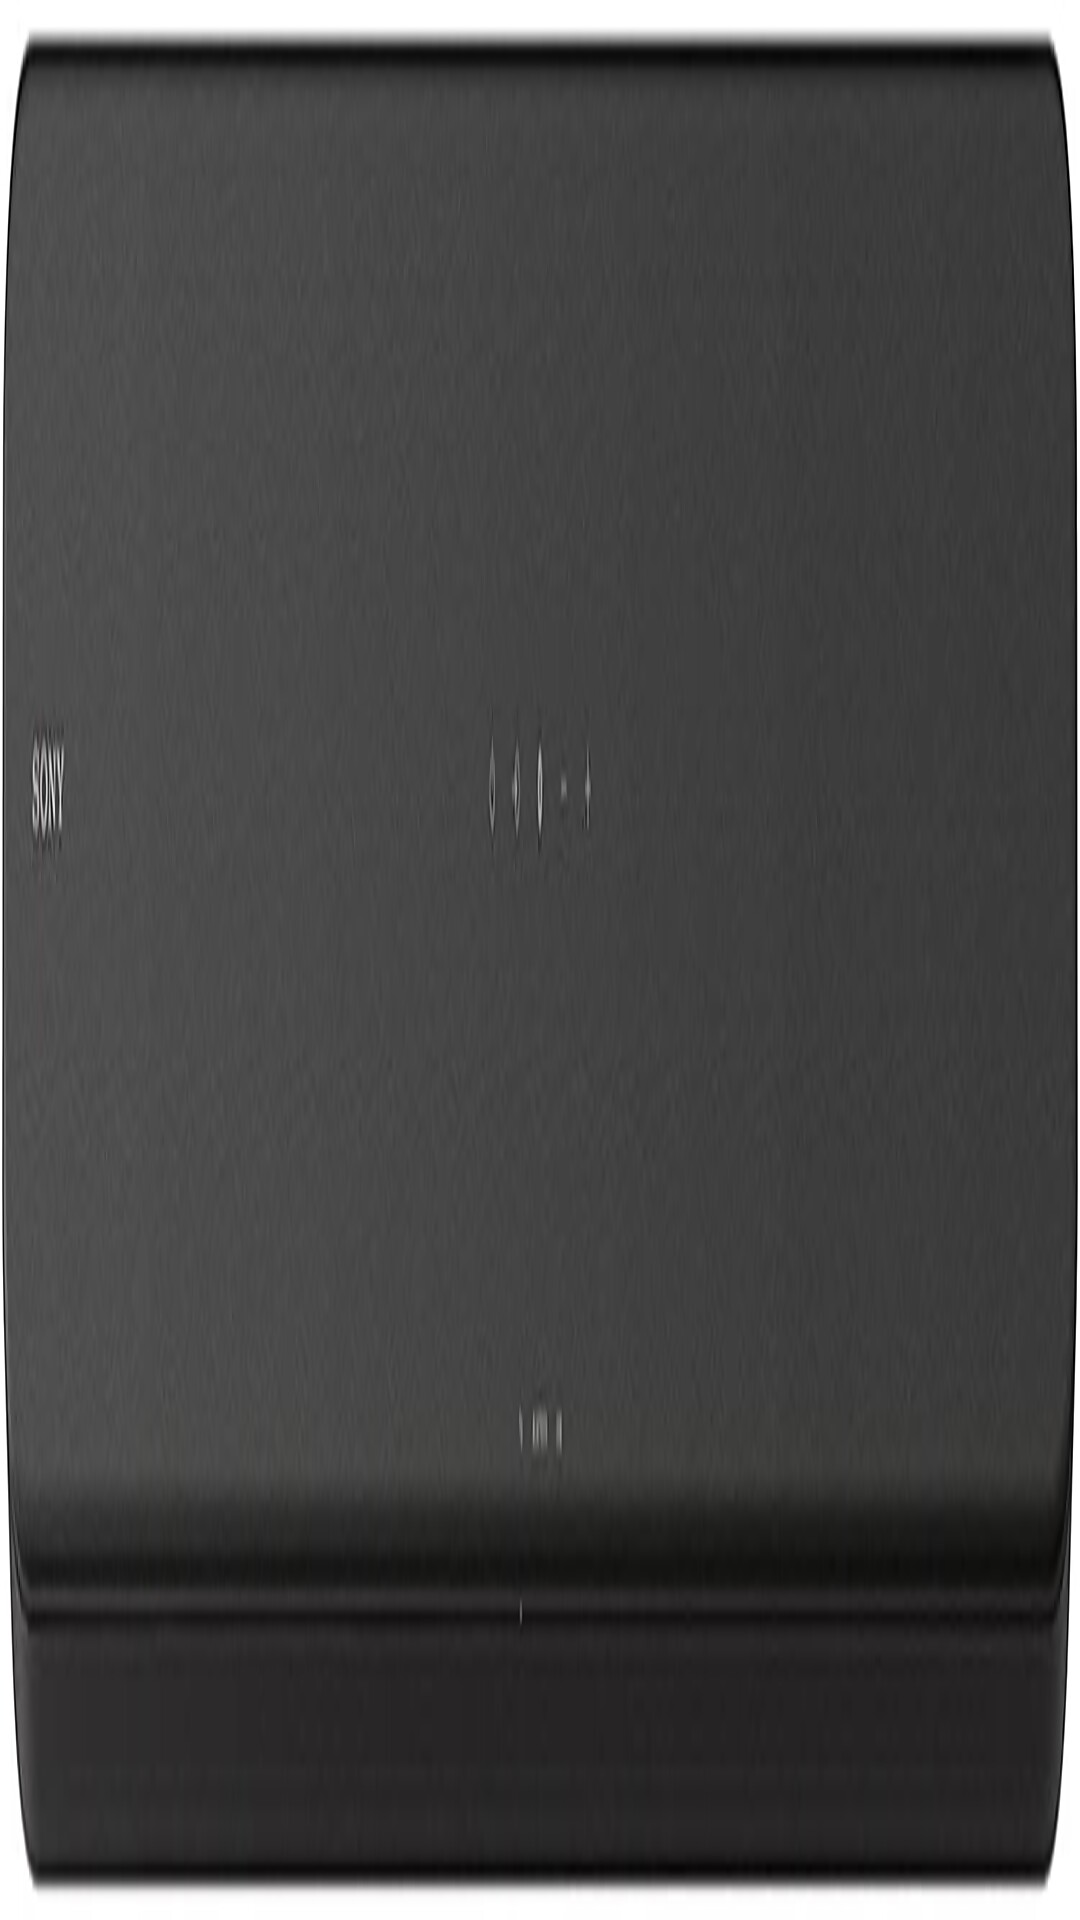 Barra de Sonido Sony Inalámbrico BT-HDMI-USB 600W, SISTEMAS DE AUDIO, SISTEMAS DE AUDIO, AUDIO, TECNOLOGÍA, ELECTRONICA